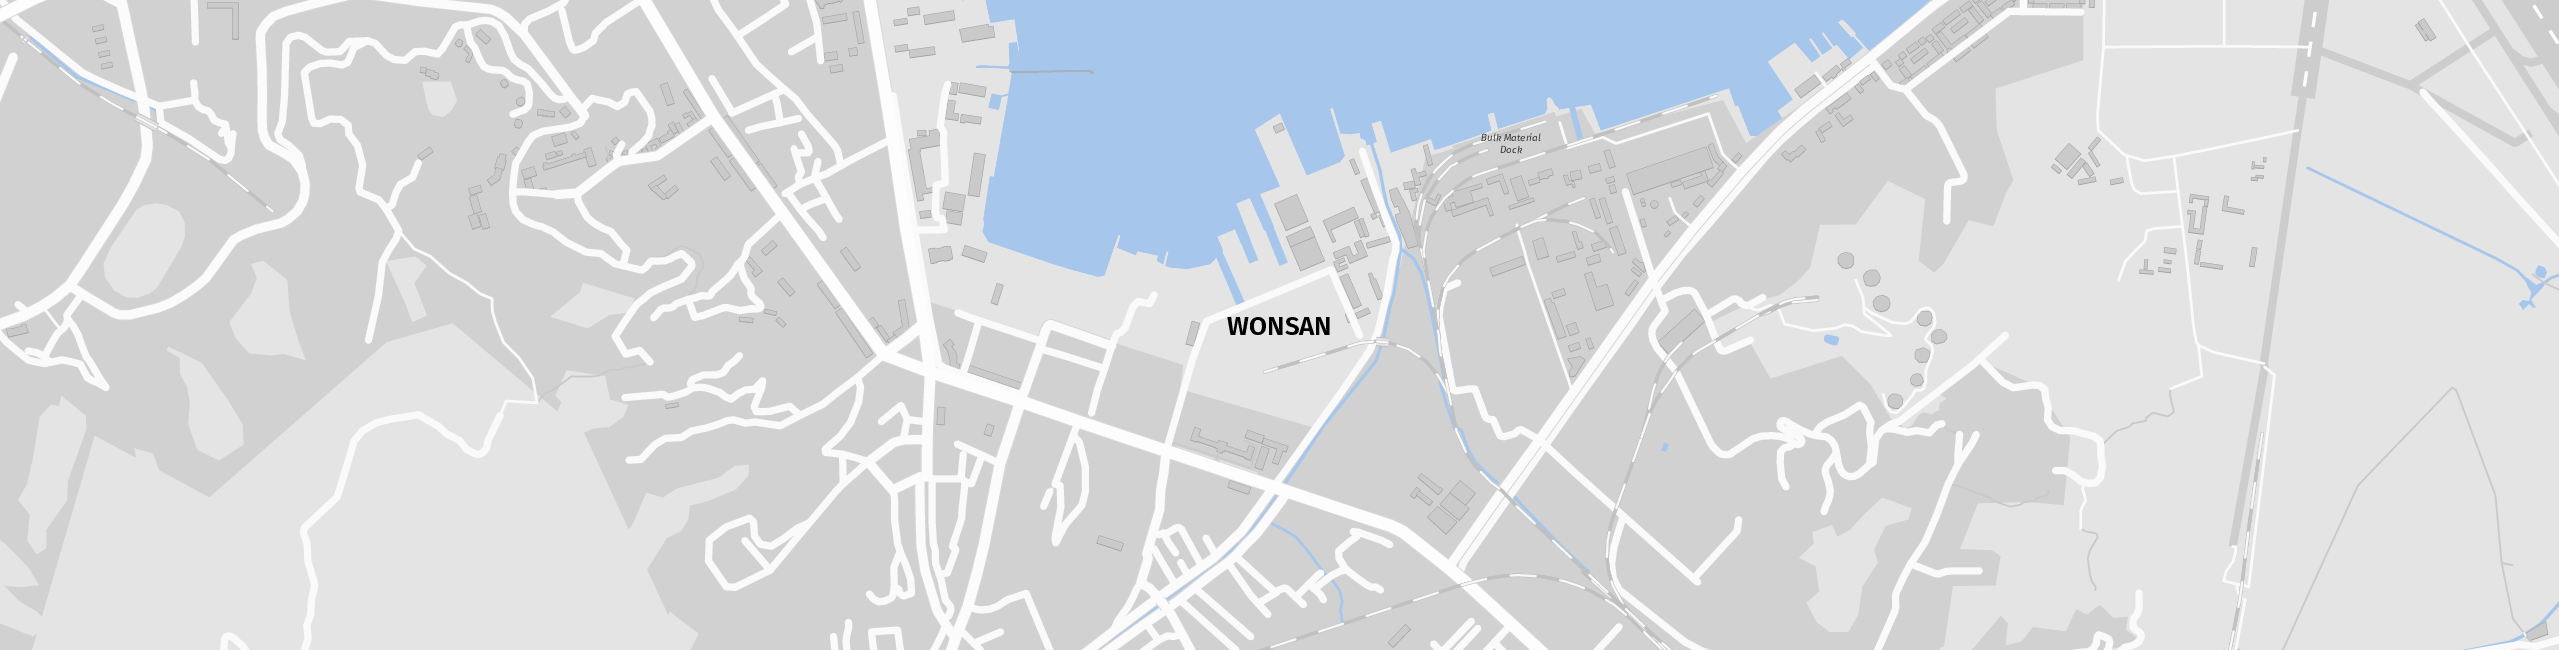 Stadtplan Wonsan zum Downloaden.